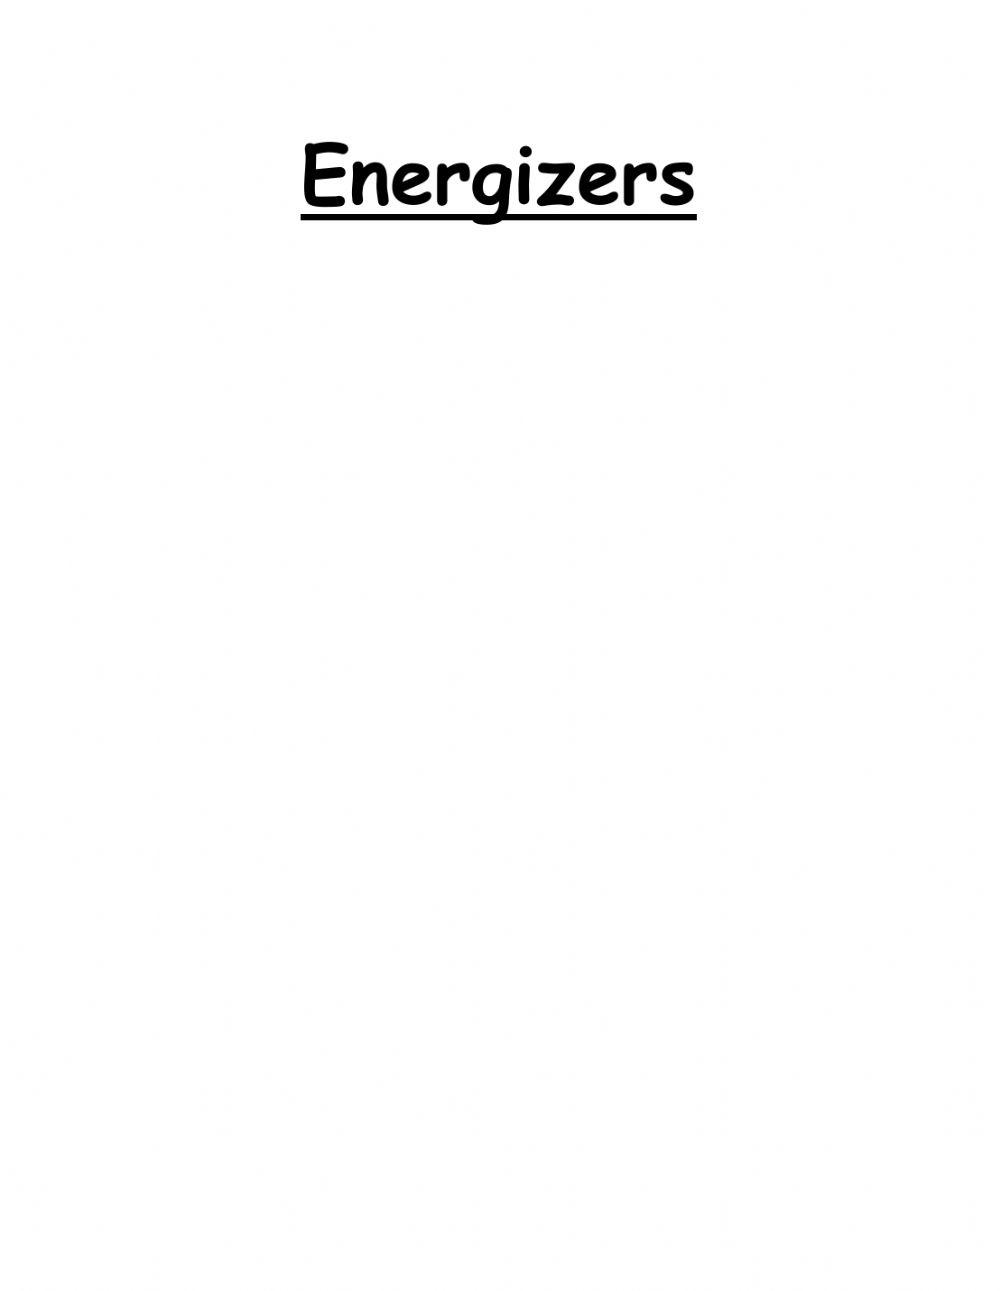 Music & Energizer